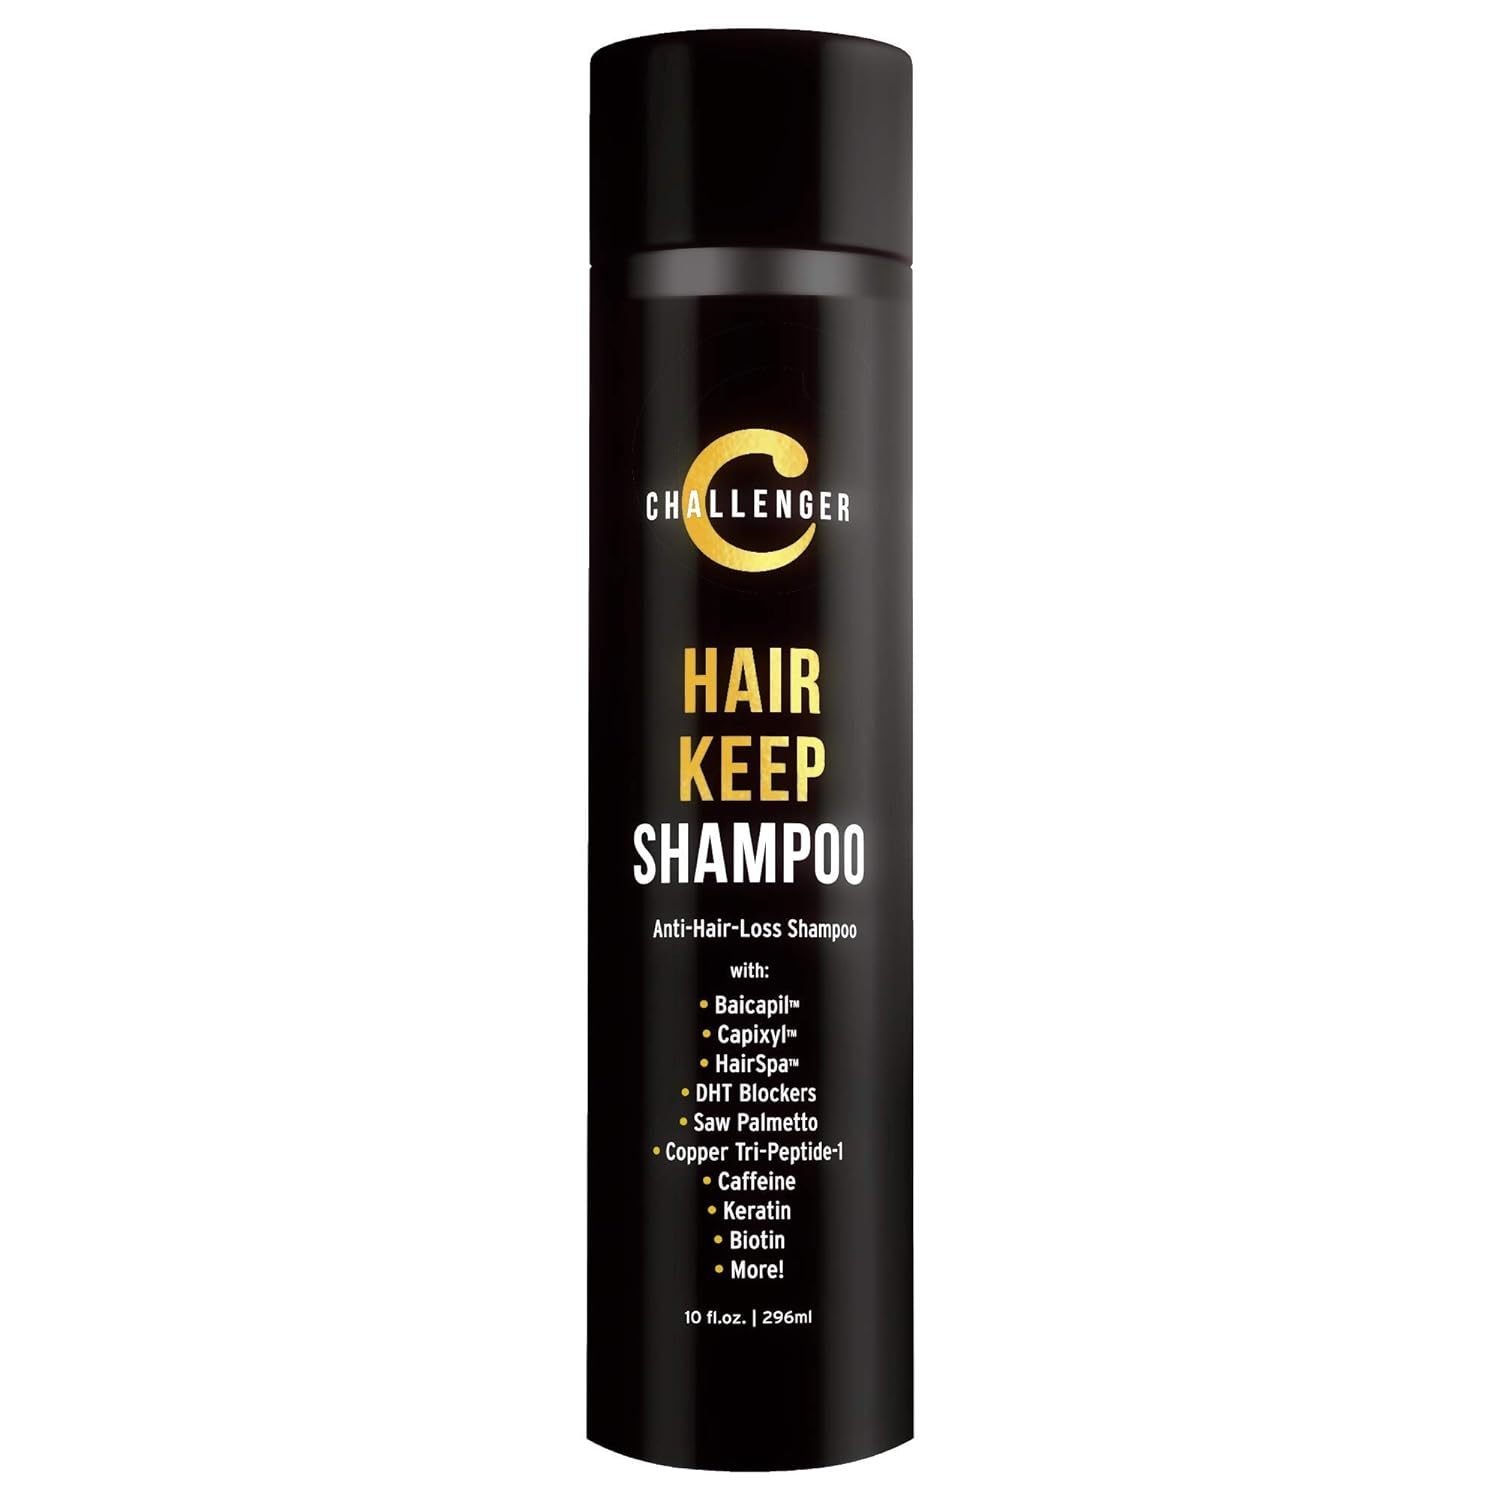 Challenger Men's Hair Keep Shampoo, 10 Oz. | DHT Blocking Hair Growth Shampoo | w/Baicapil, Capixyl, HairSpa | Caffeine, Biotin, Hyaluronic Acid, Copper Tri-Peptide, Saw Palmetto & More(2 mo. Supply)